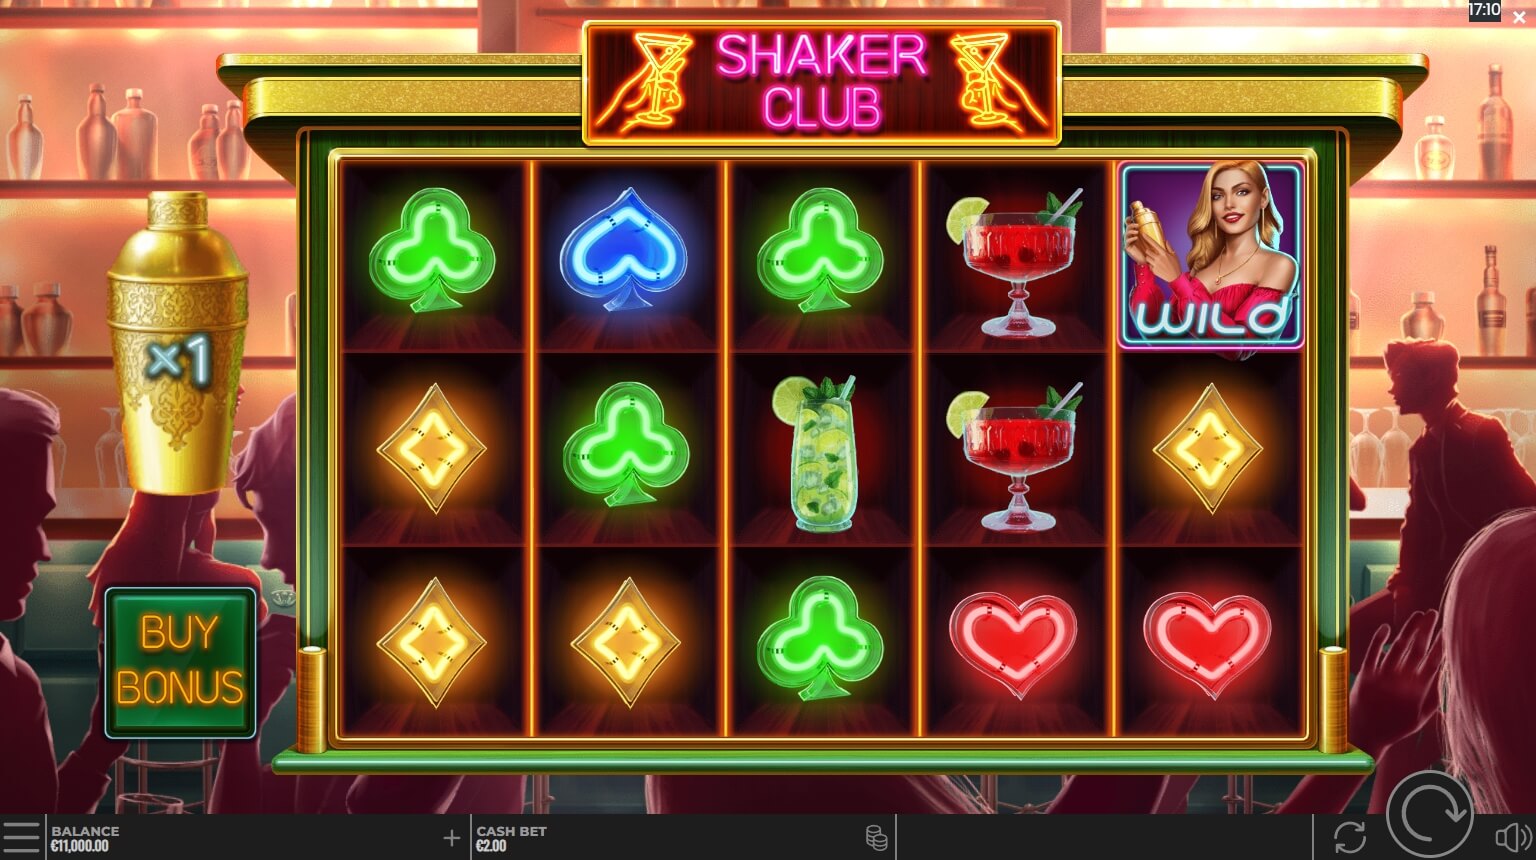 Shaker Club Yggdrasil joker gaming